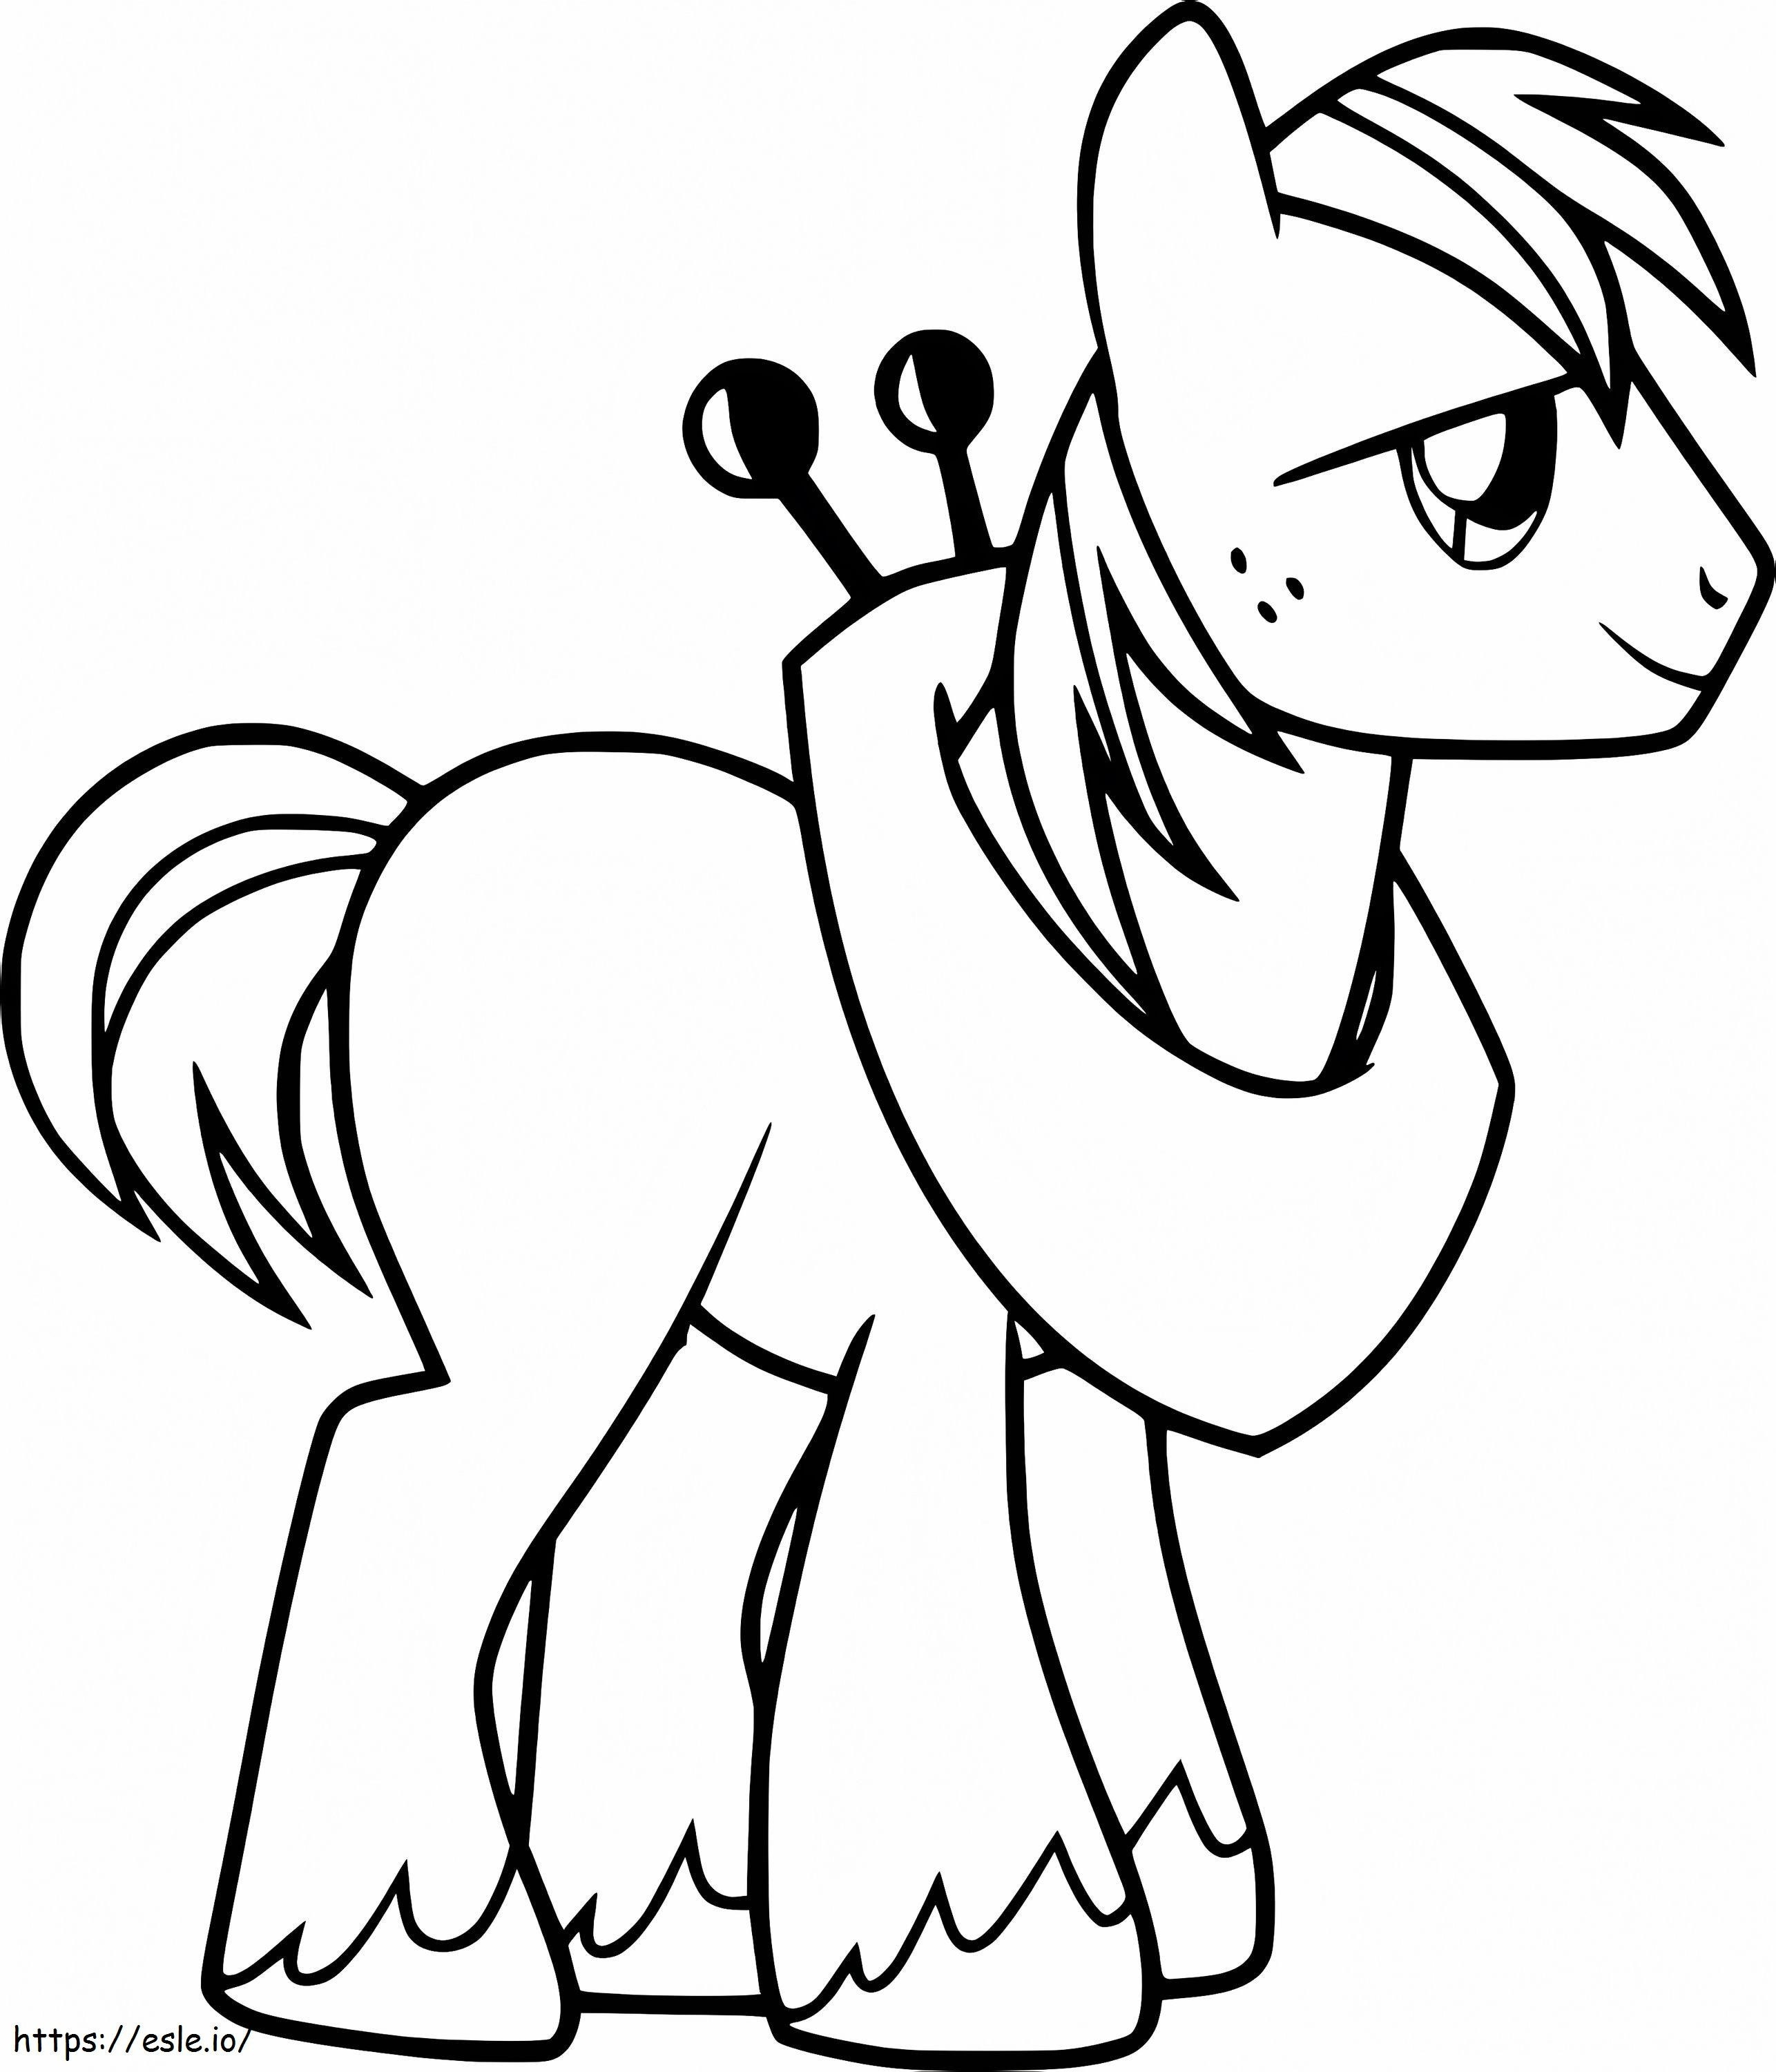 Big Mclntosh de My Little Pony para colorir